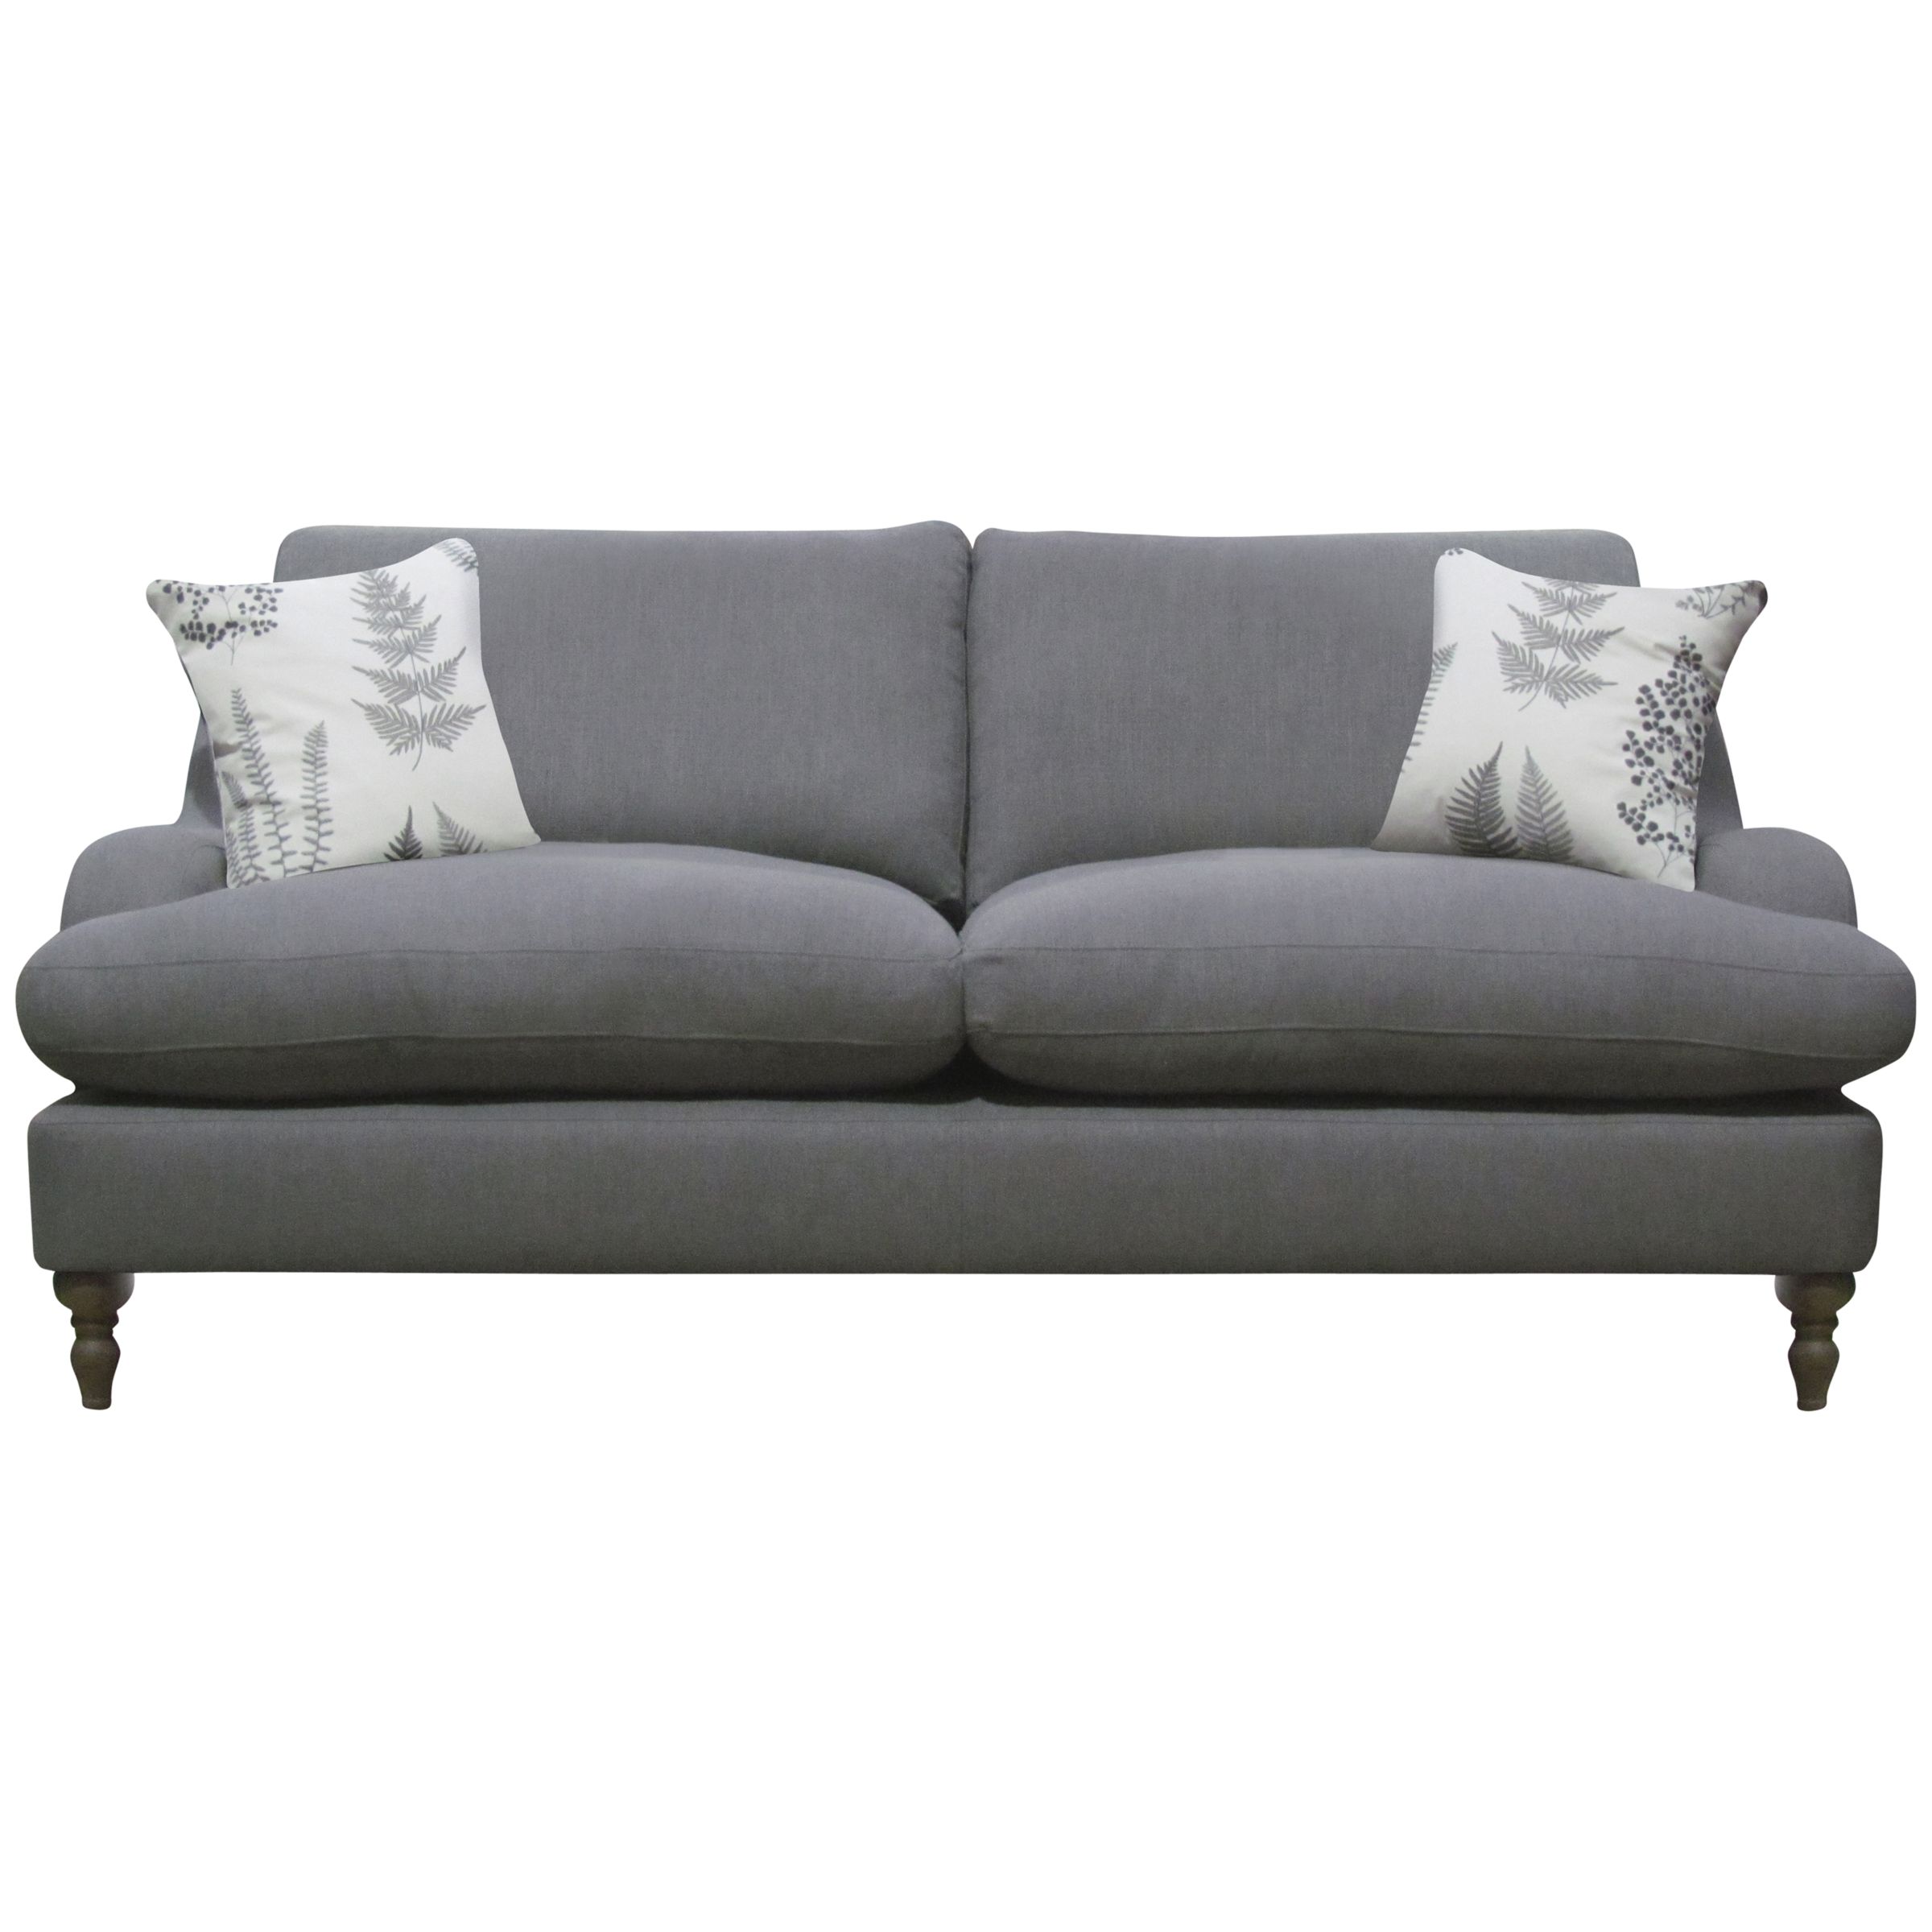 John Lewis Bracken Large Sofa, Charcoal, width 190cm